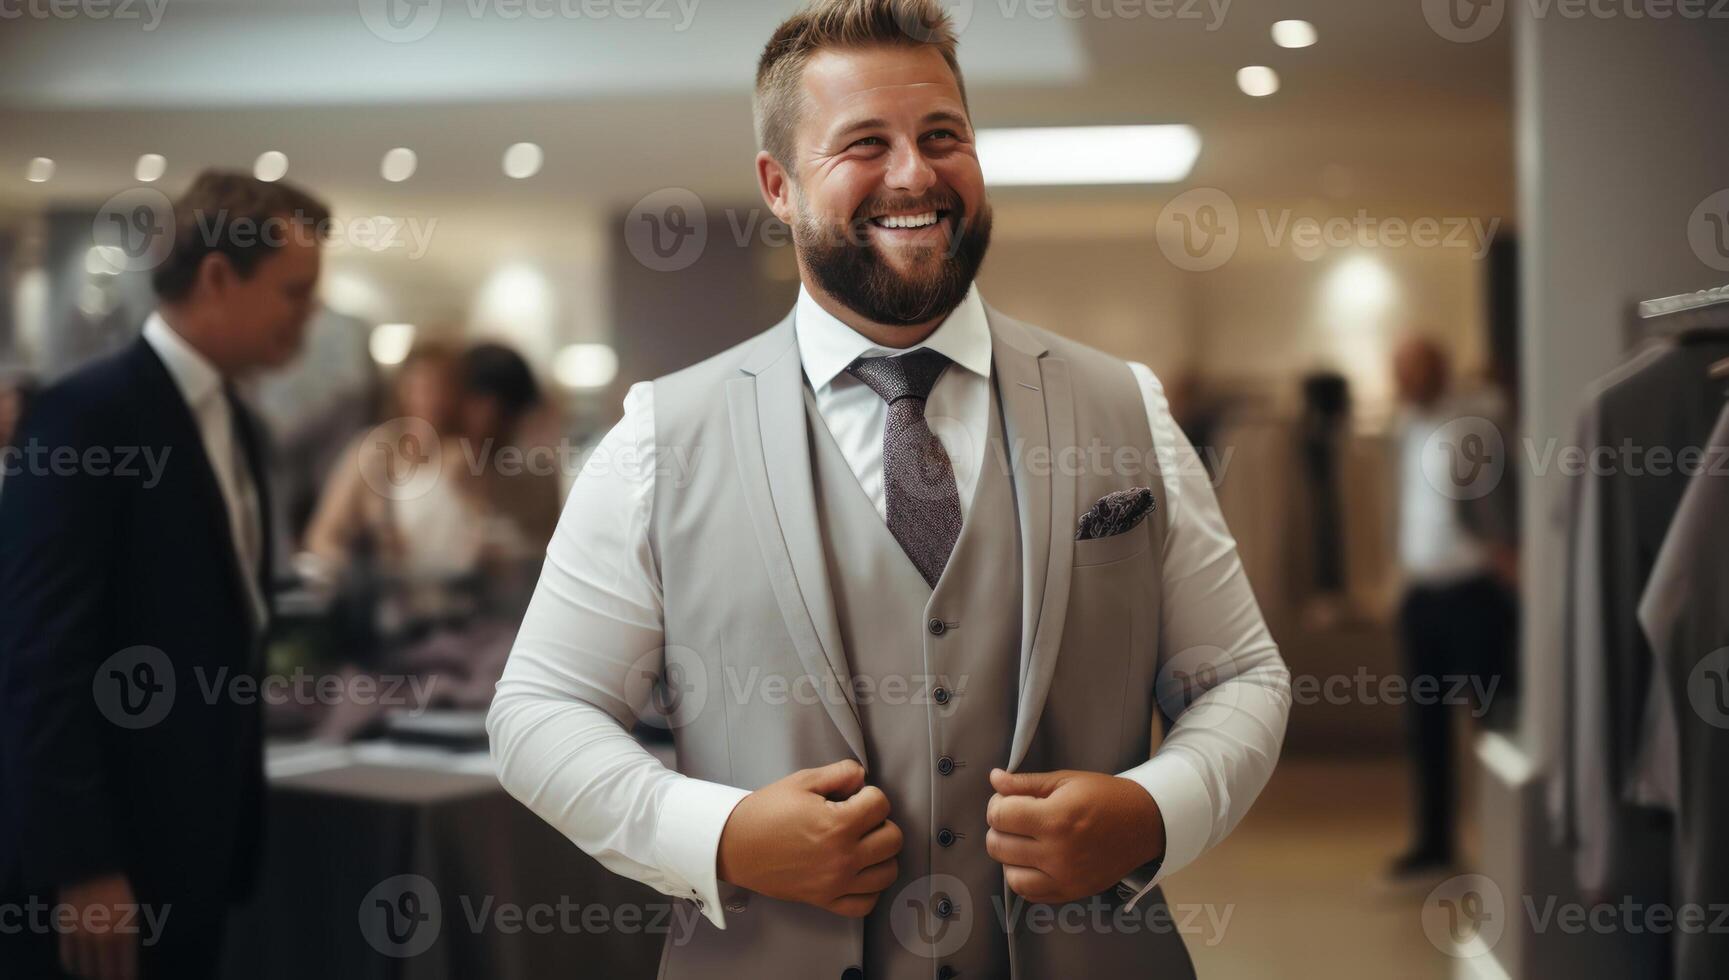 AI generated Joyful adult man adjusting a wedding suit in a tailoring studio photo